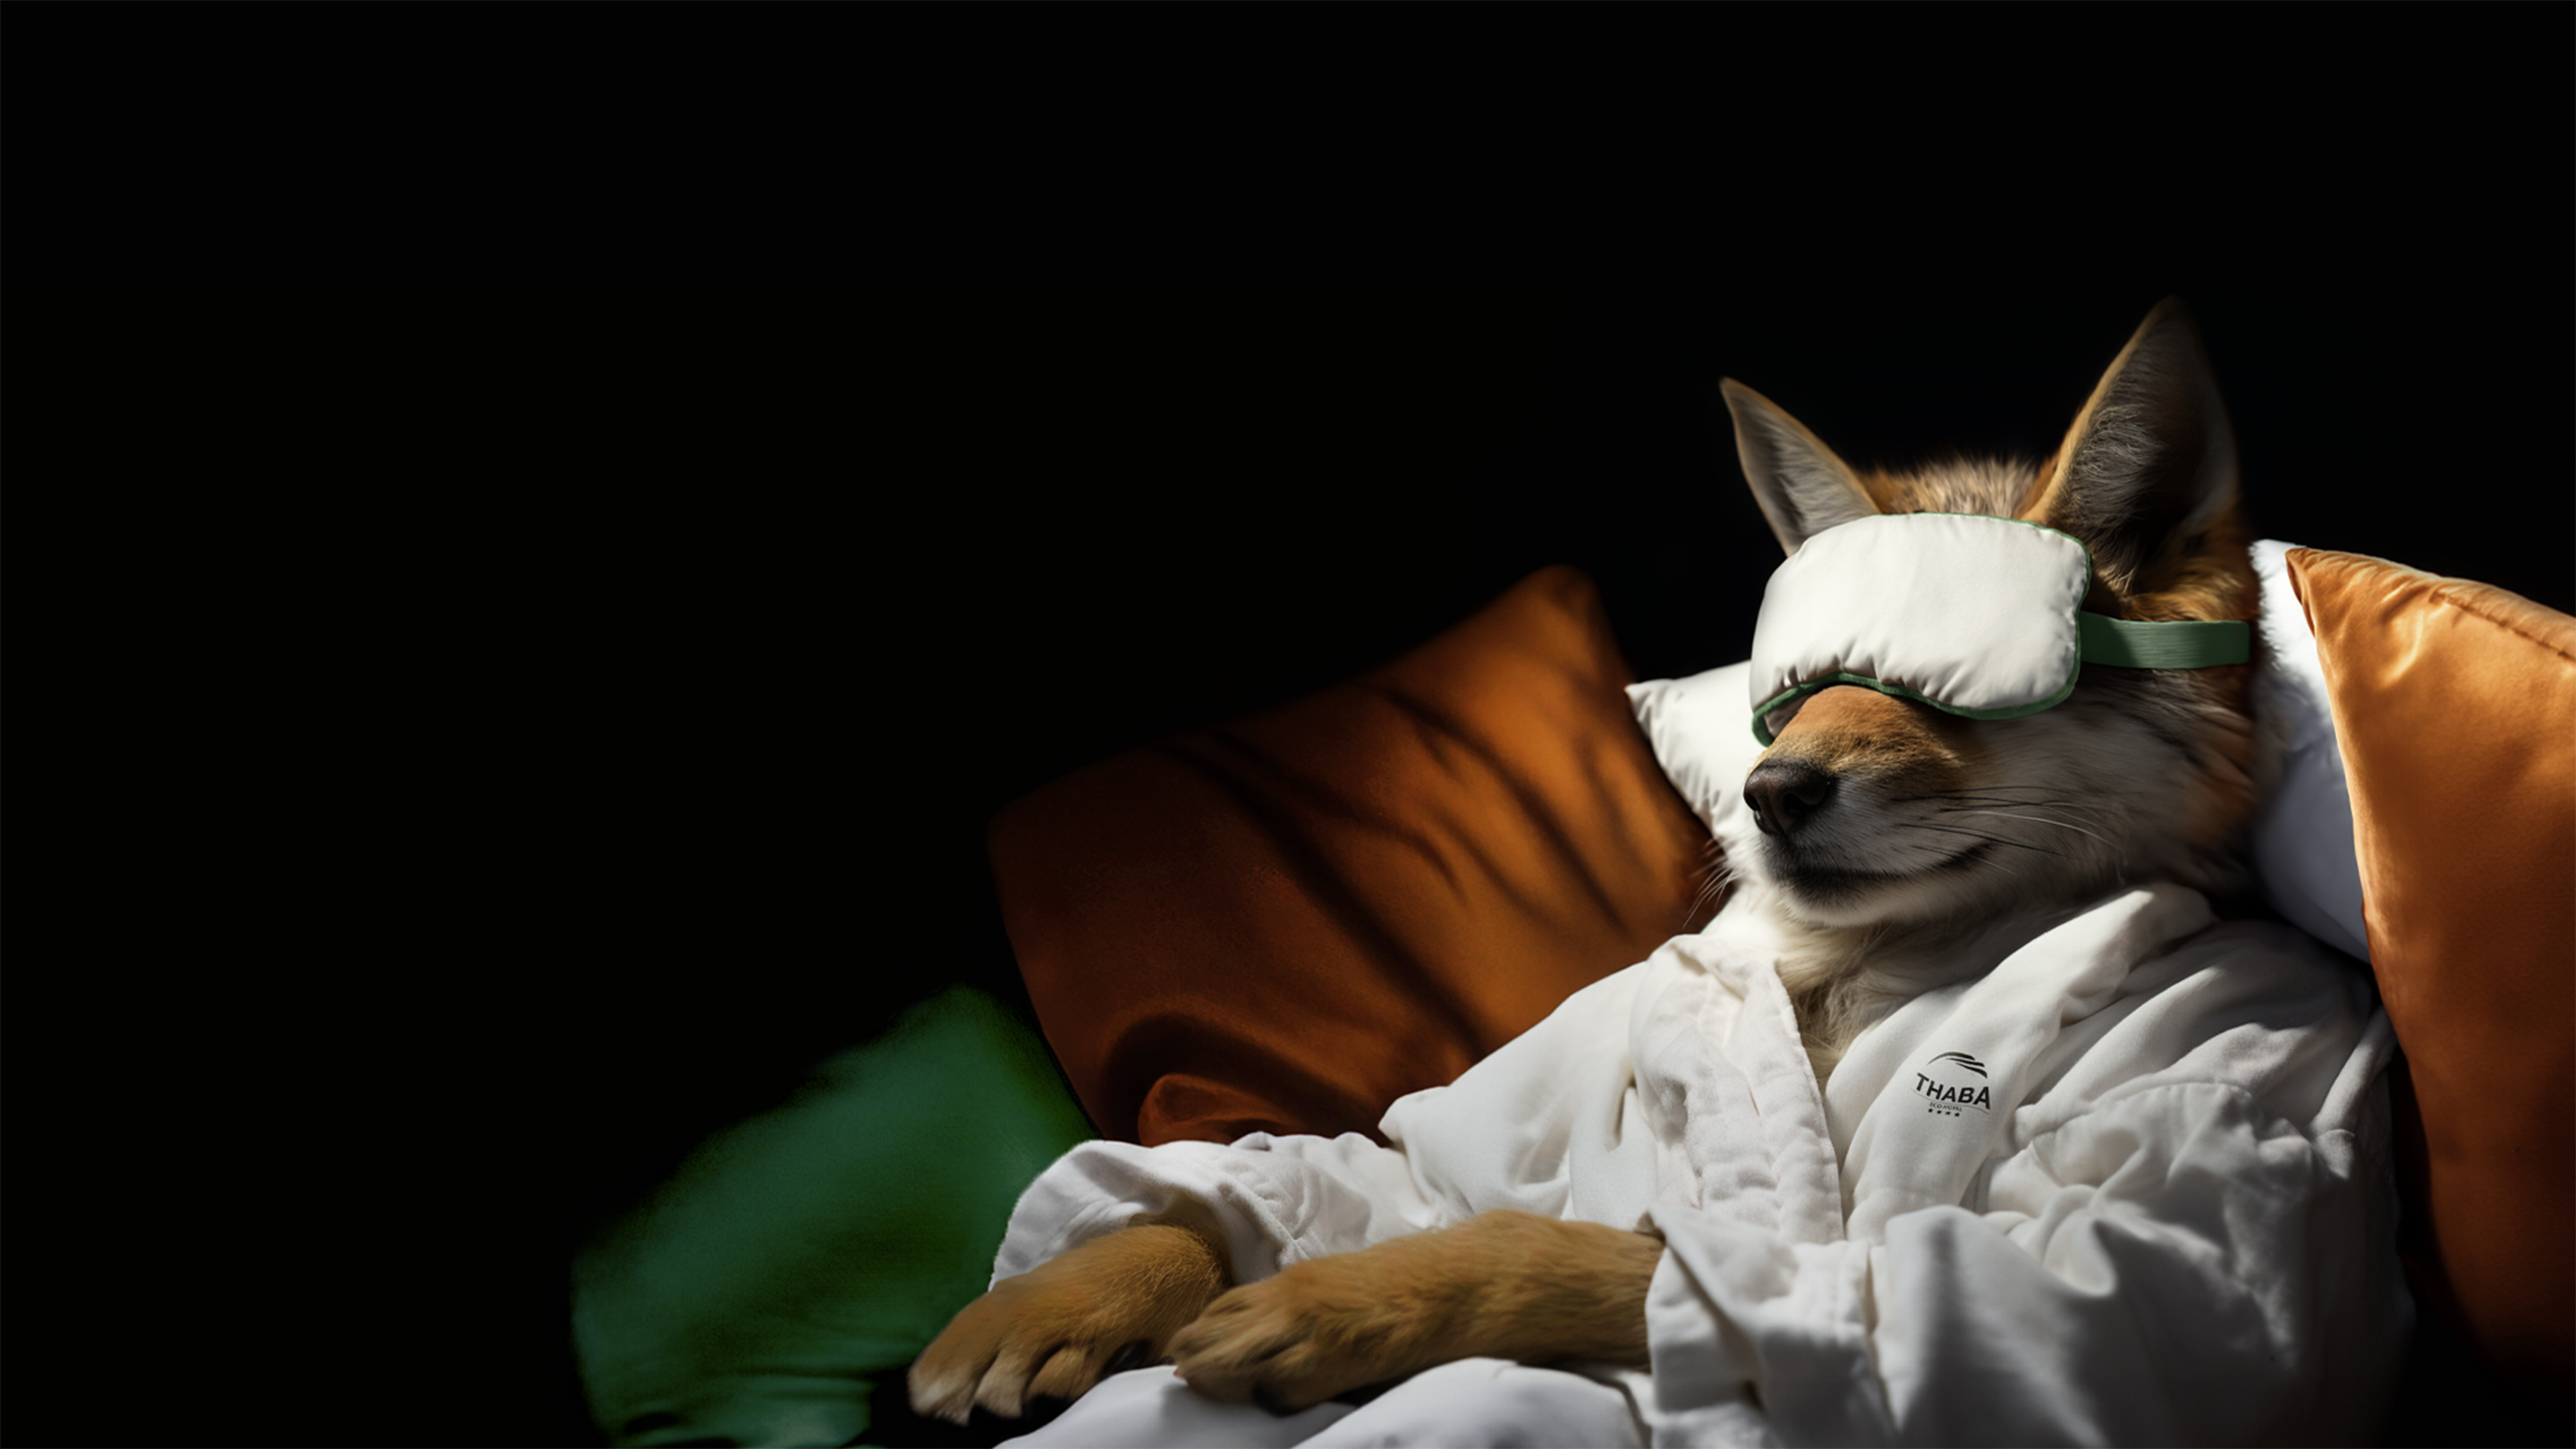 Ruri Sleeping in a Thaba Hotel bath robe with an eye mask on